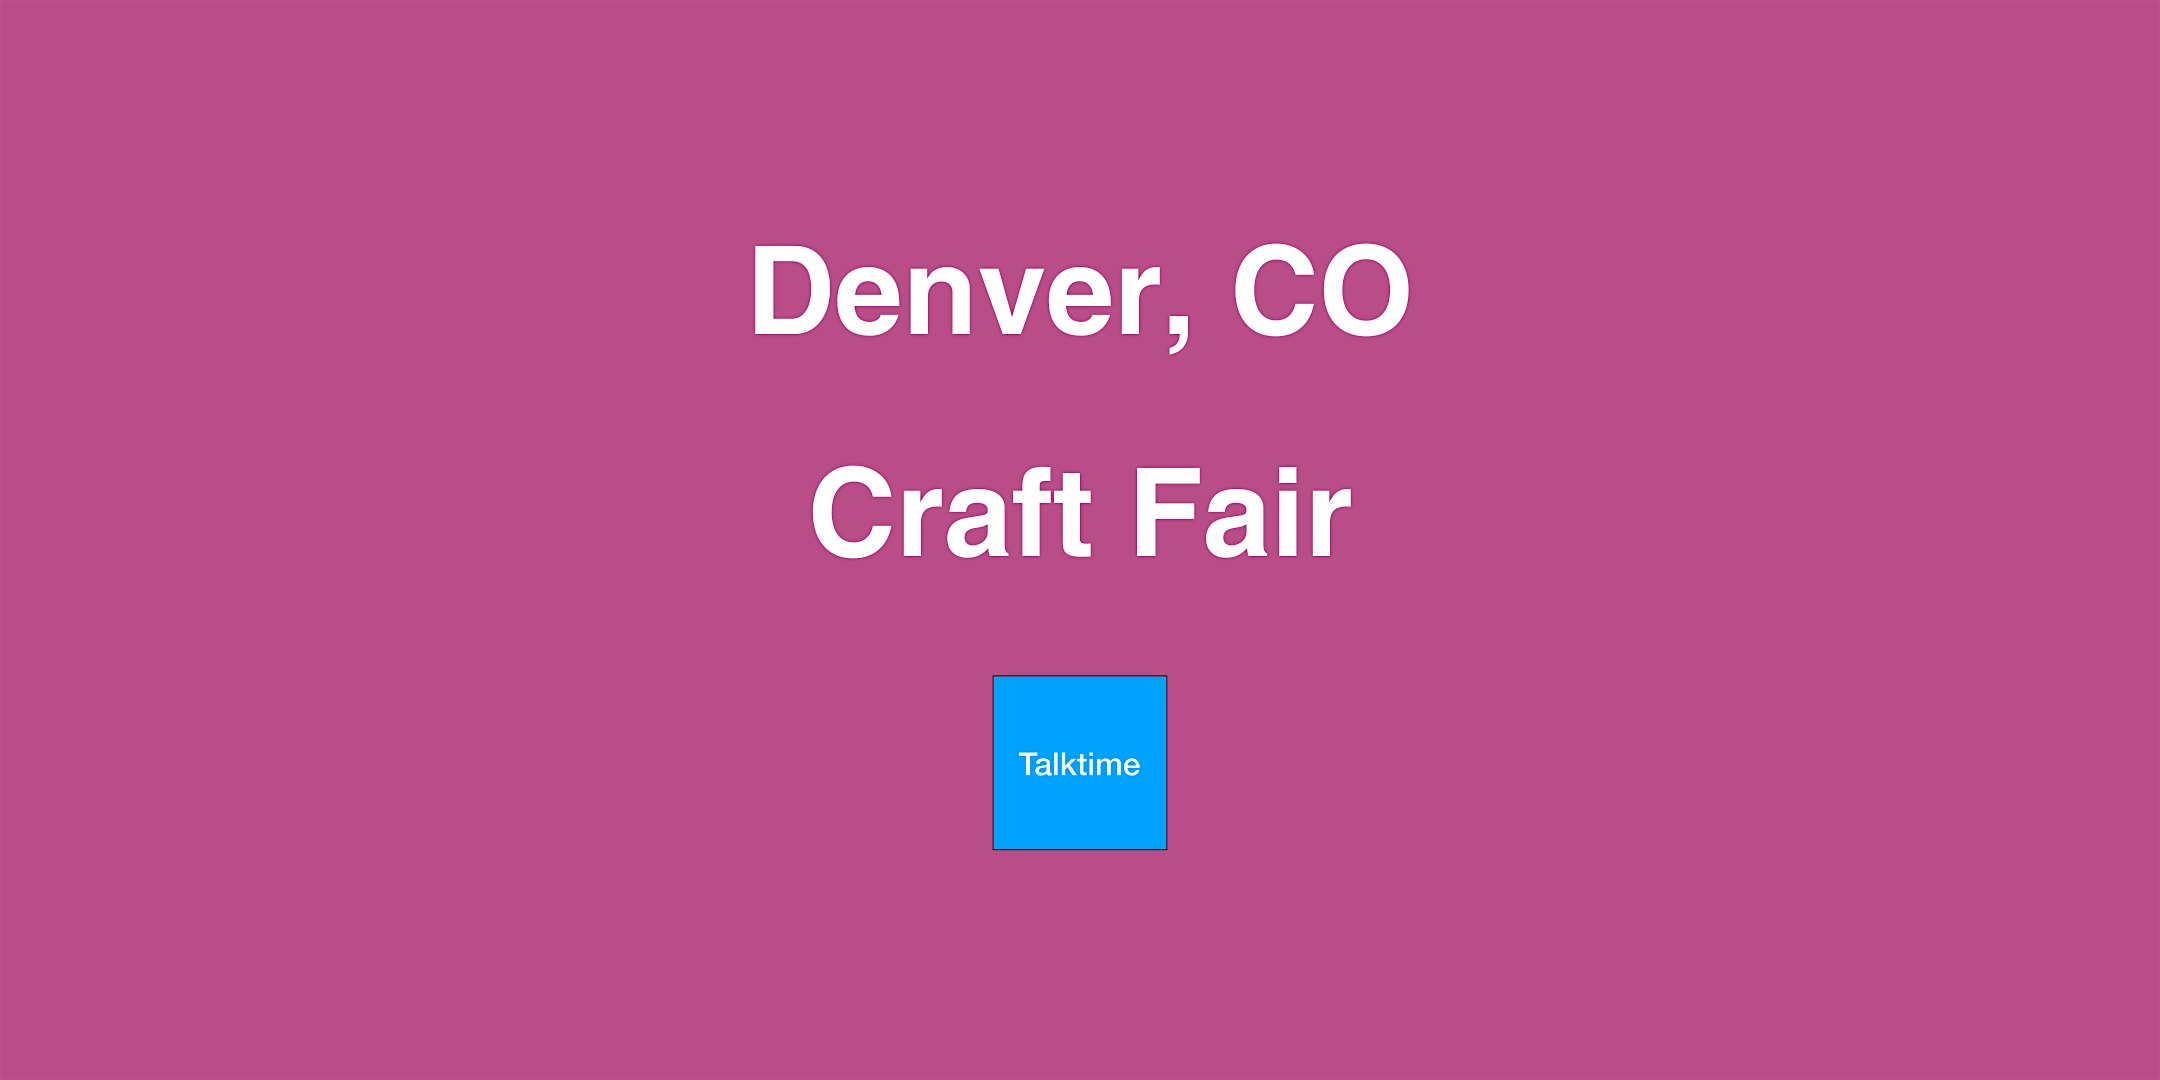 Craft Fair - Denver